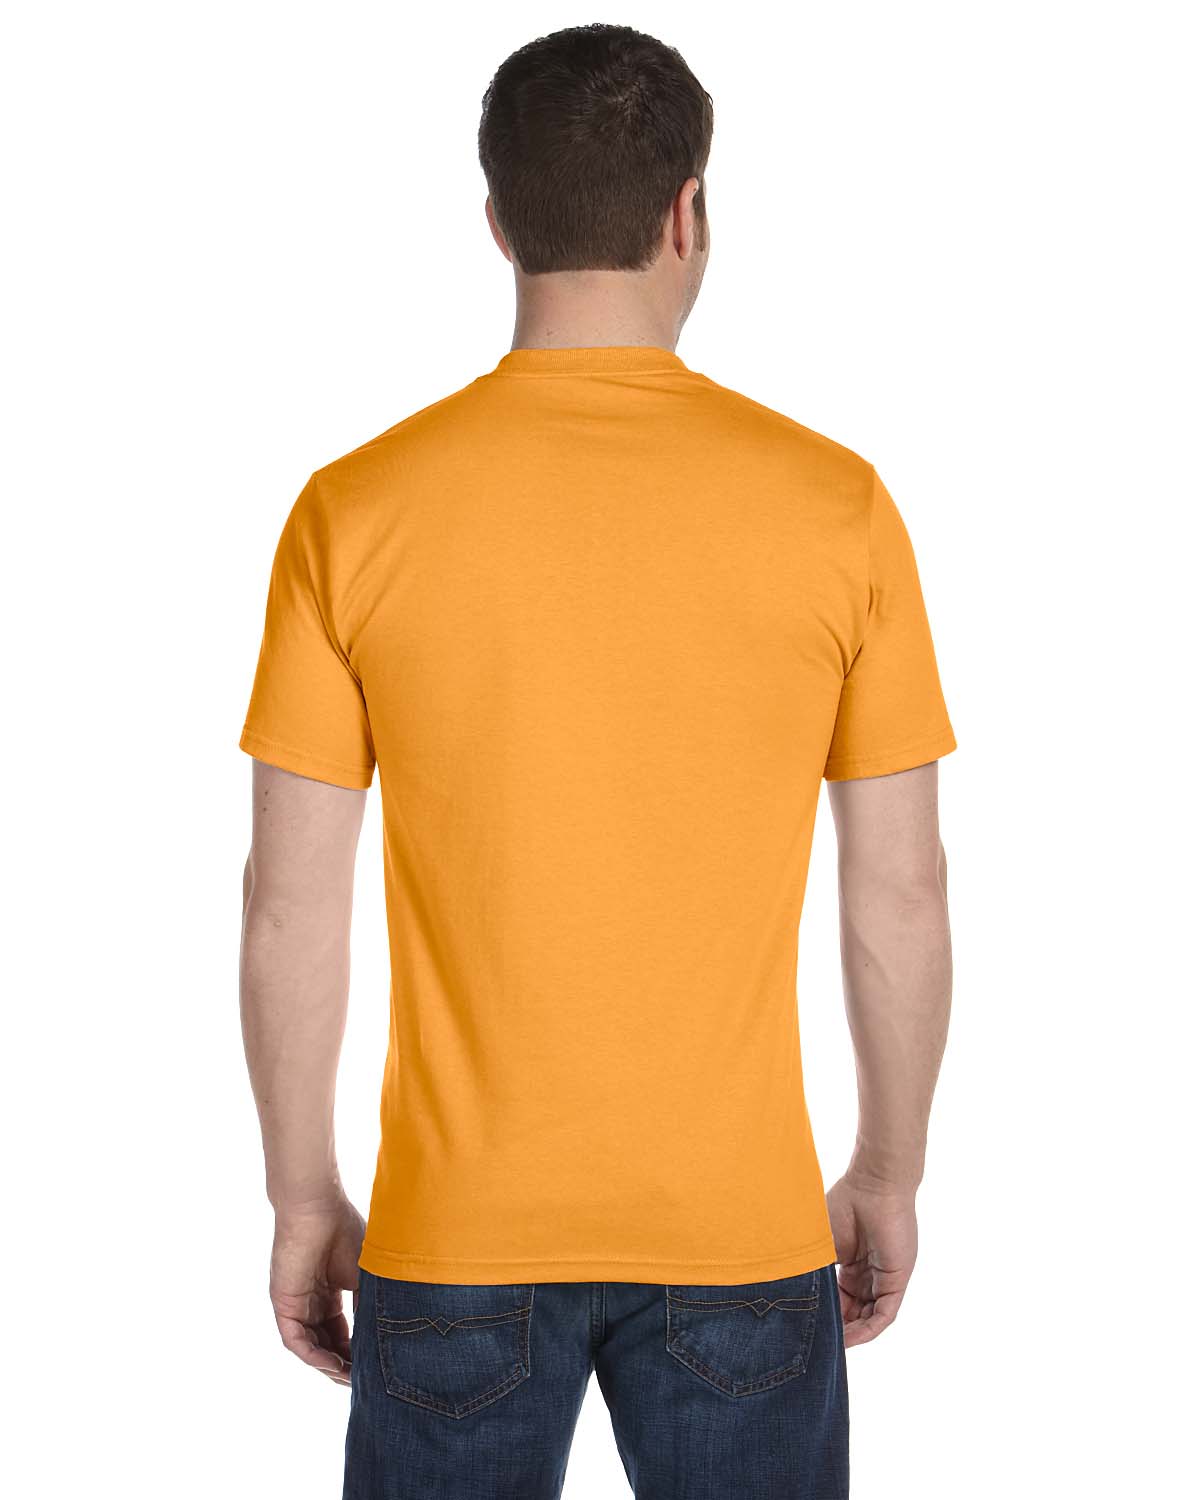 Mens 5.2 oz. ComfortSoft Cotton T-Shirt 5280 (2 PACK) - image 3 of 3